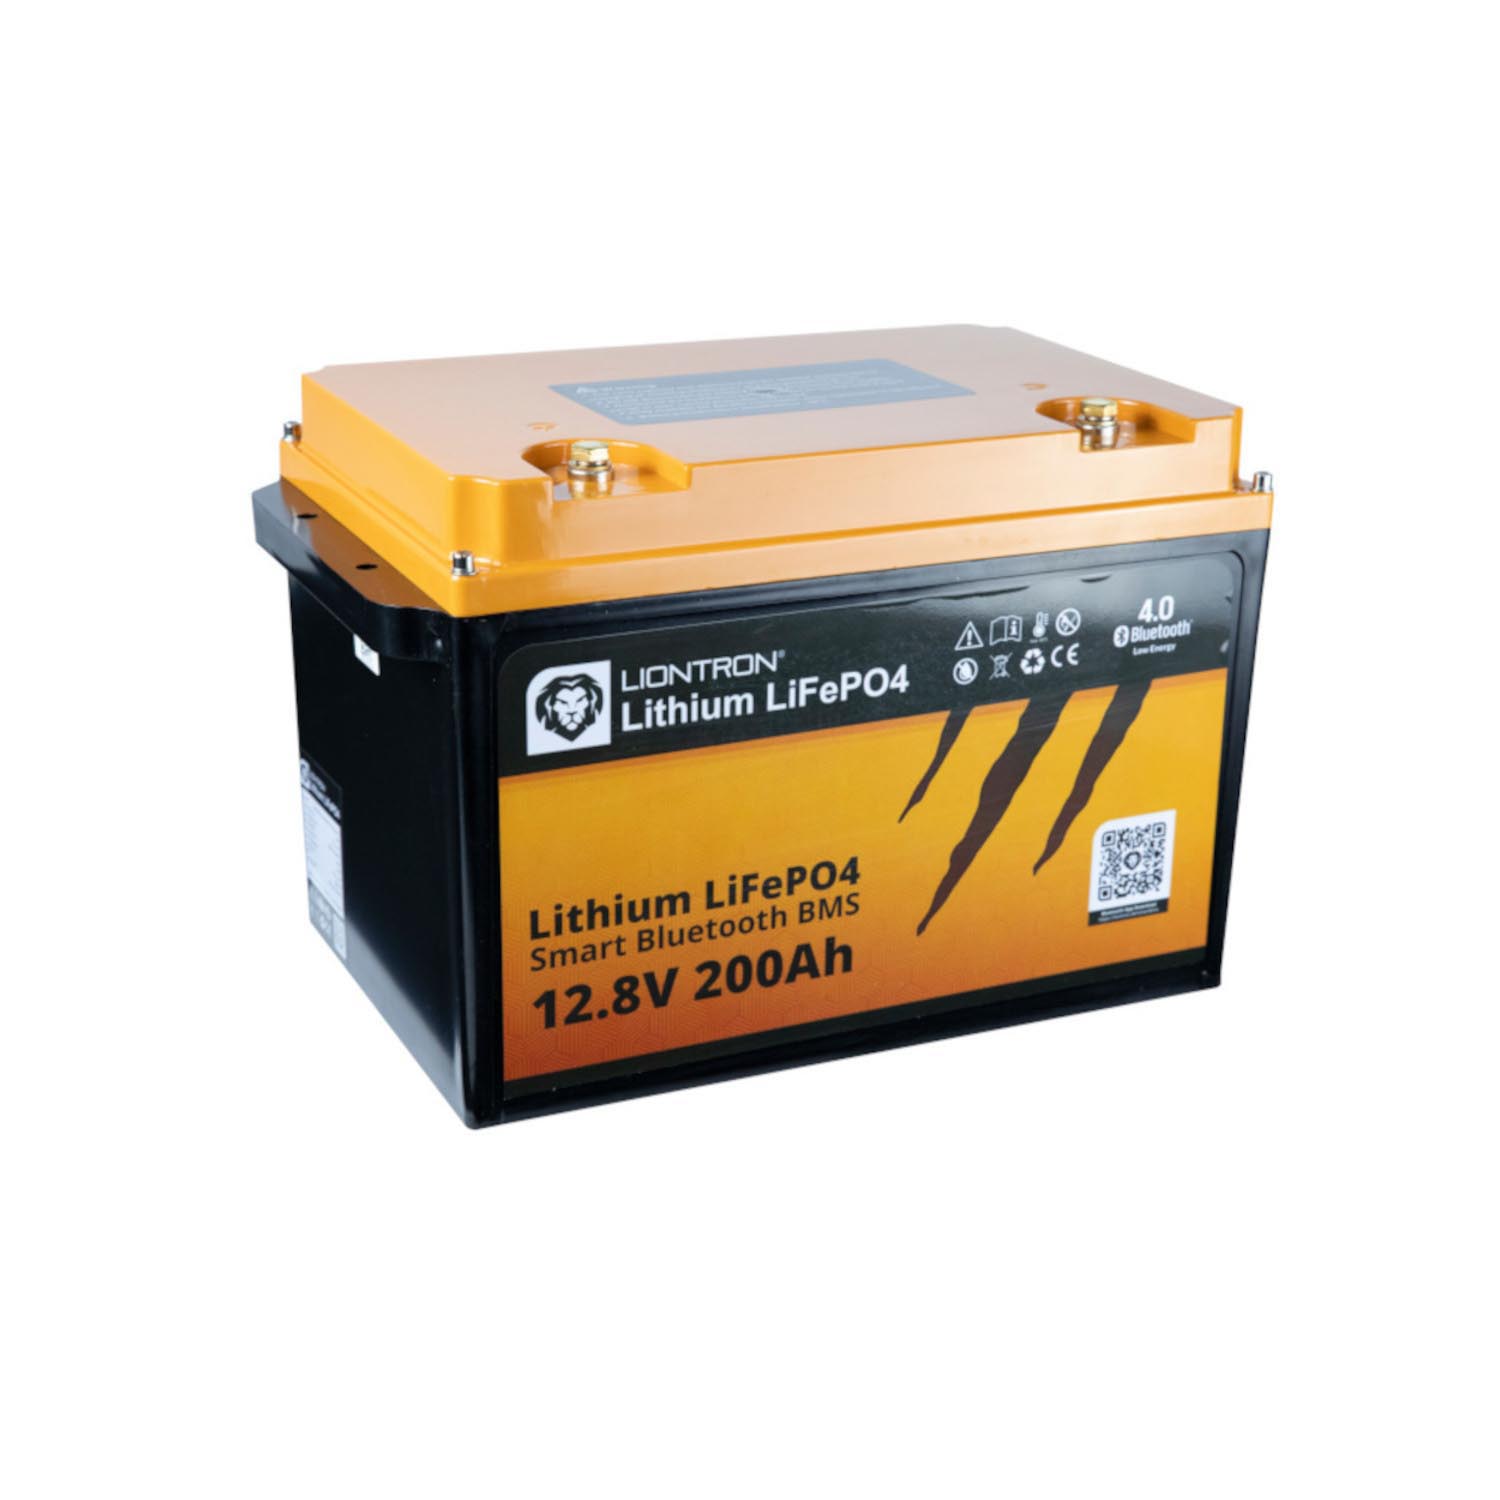 Liontron 200Ah 12V LiFePO4 Lithium Batterie Wohnmobil BMS mit App Arctic und Marine